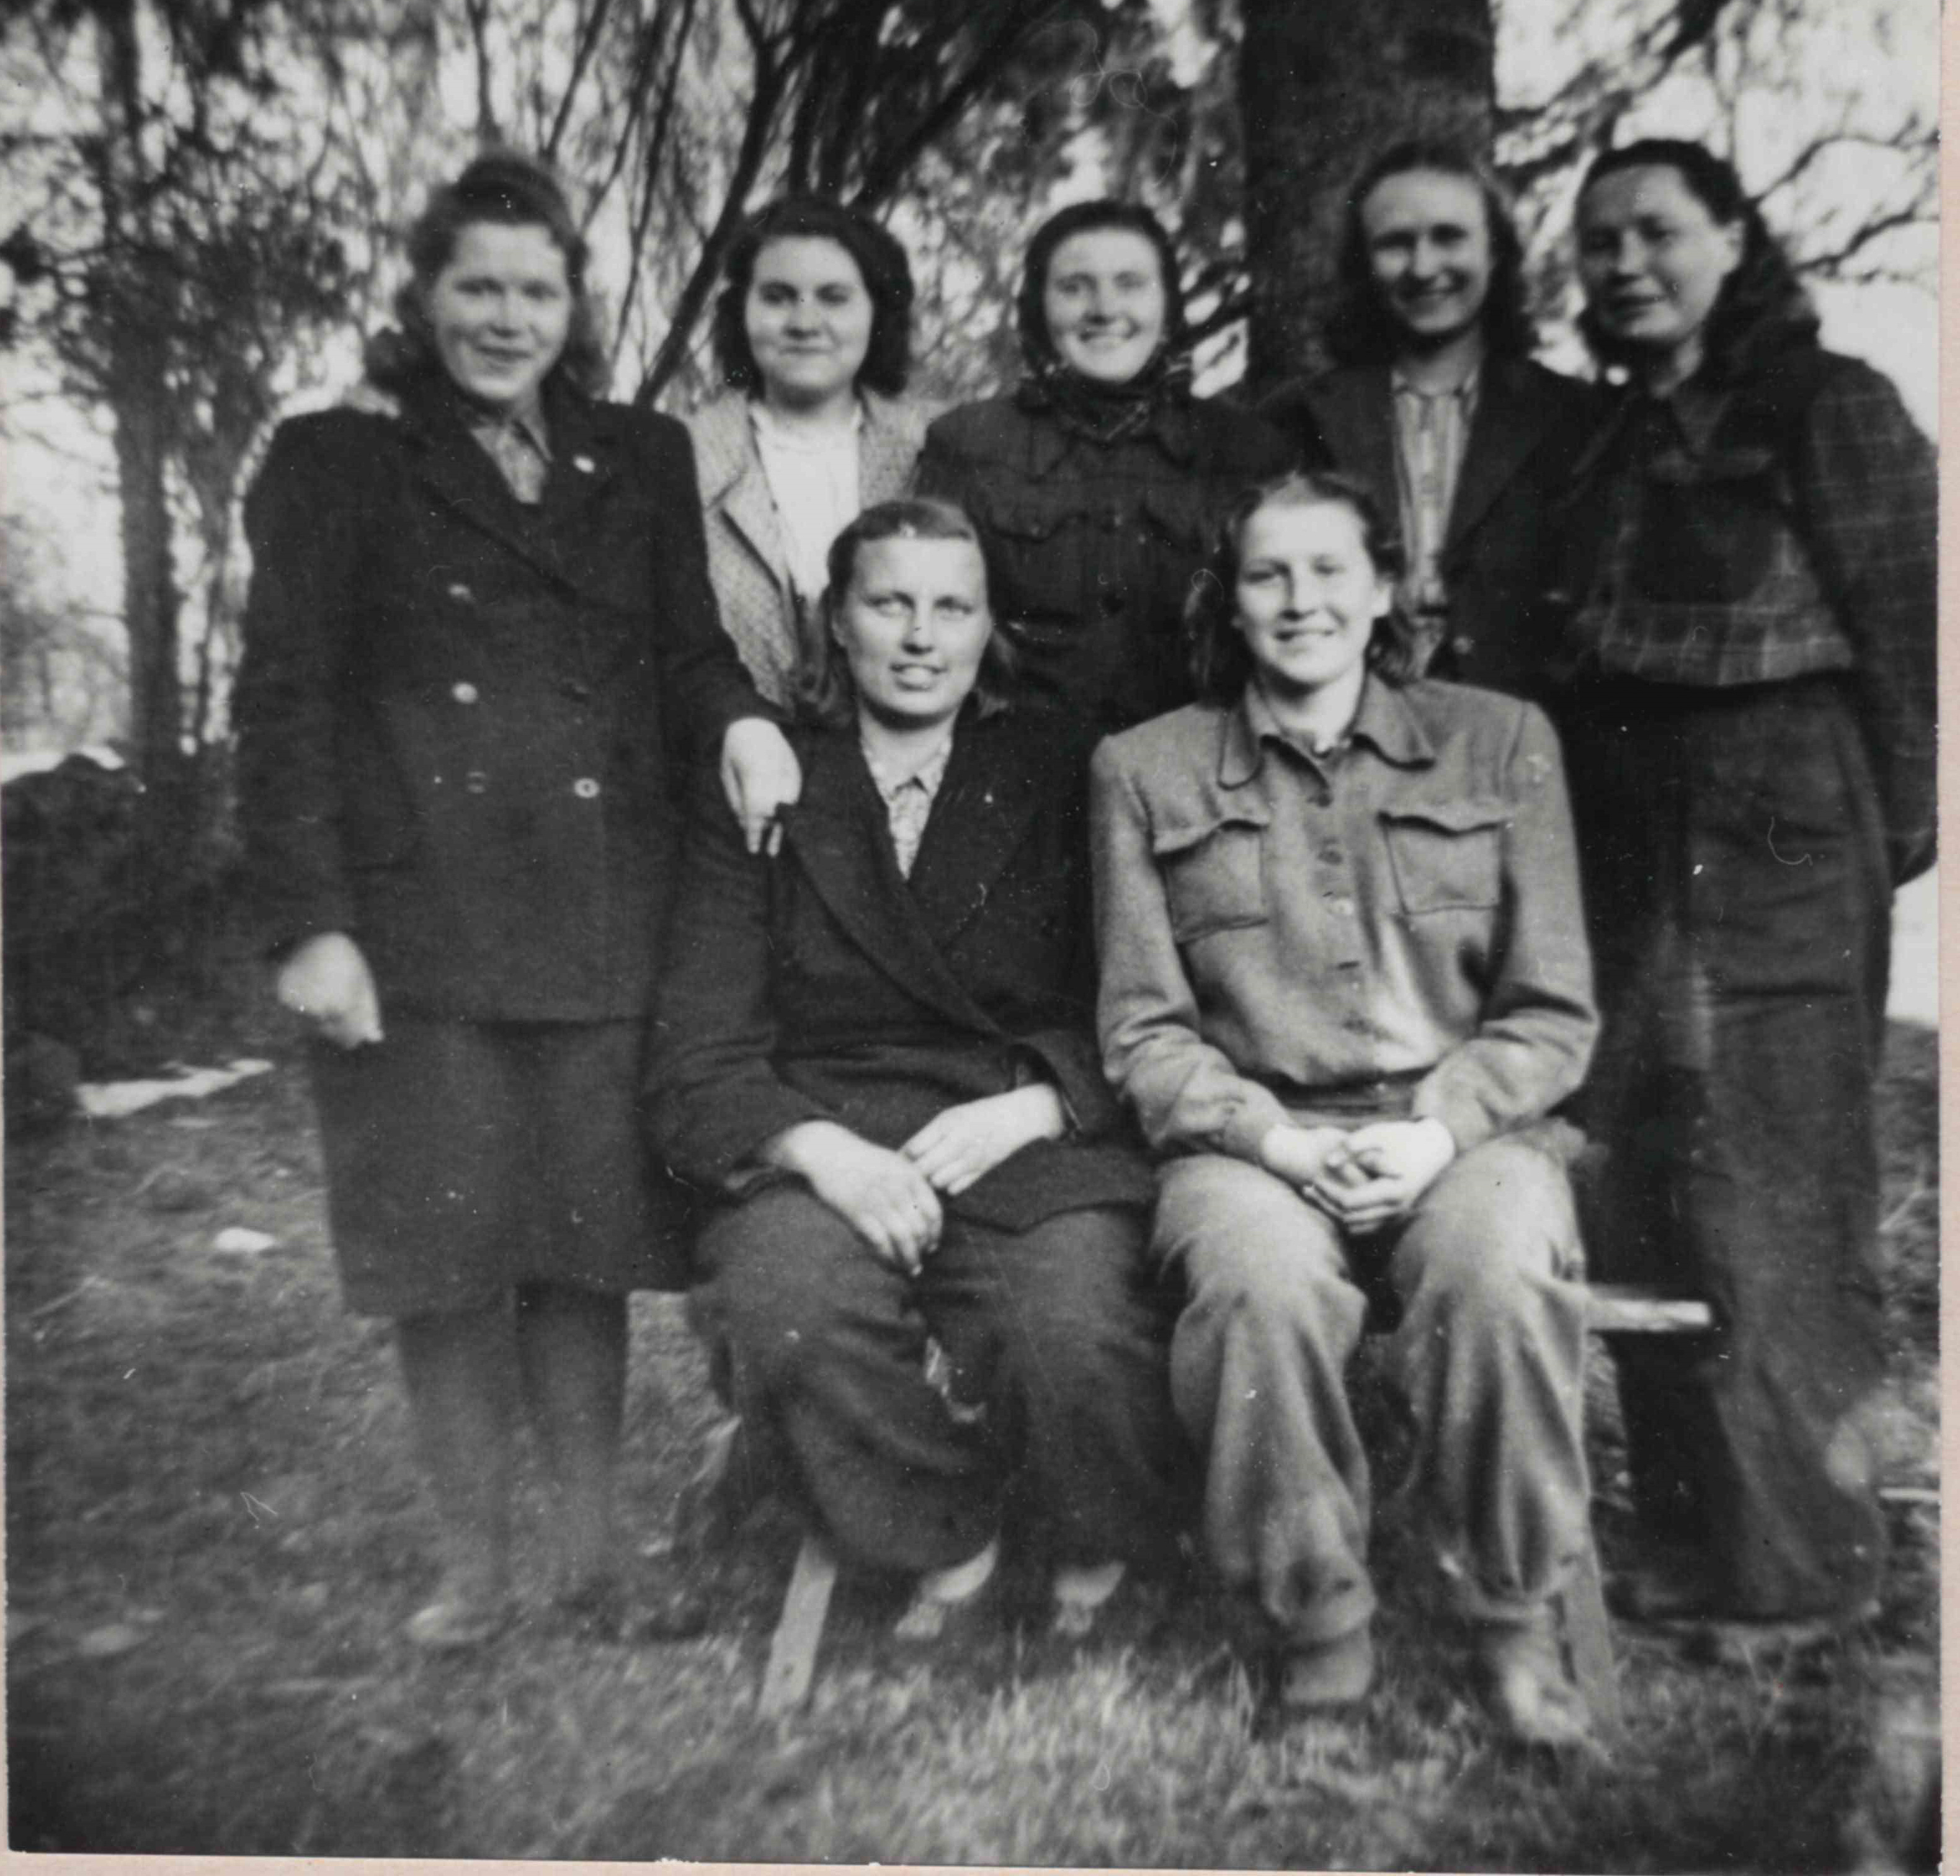 Female Tractorists in 1952's qualification raising courses